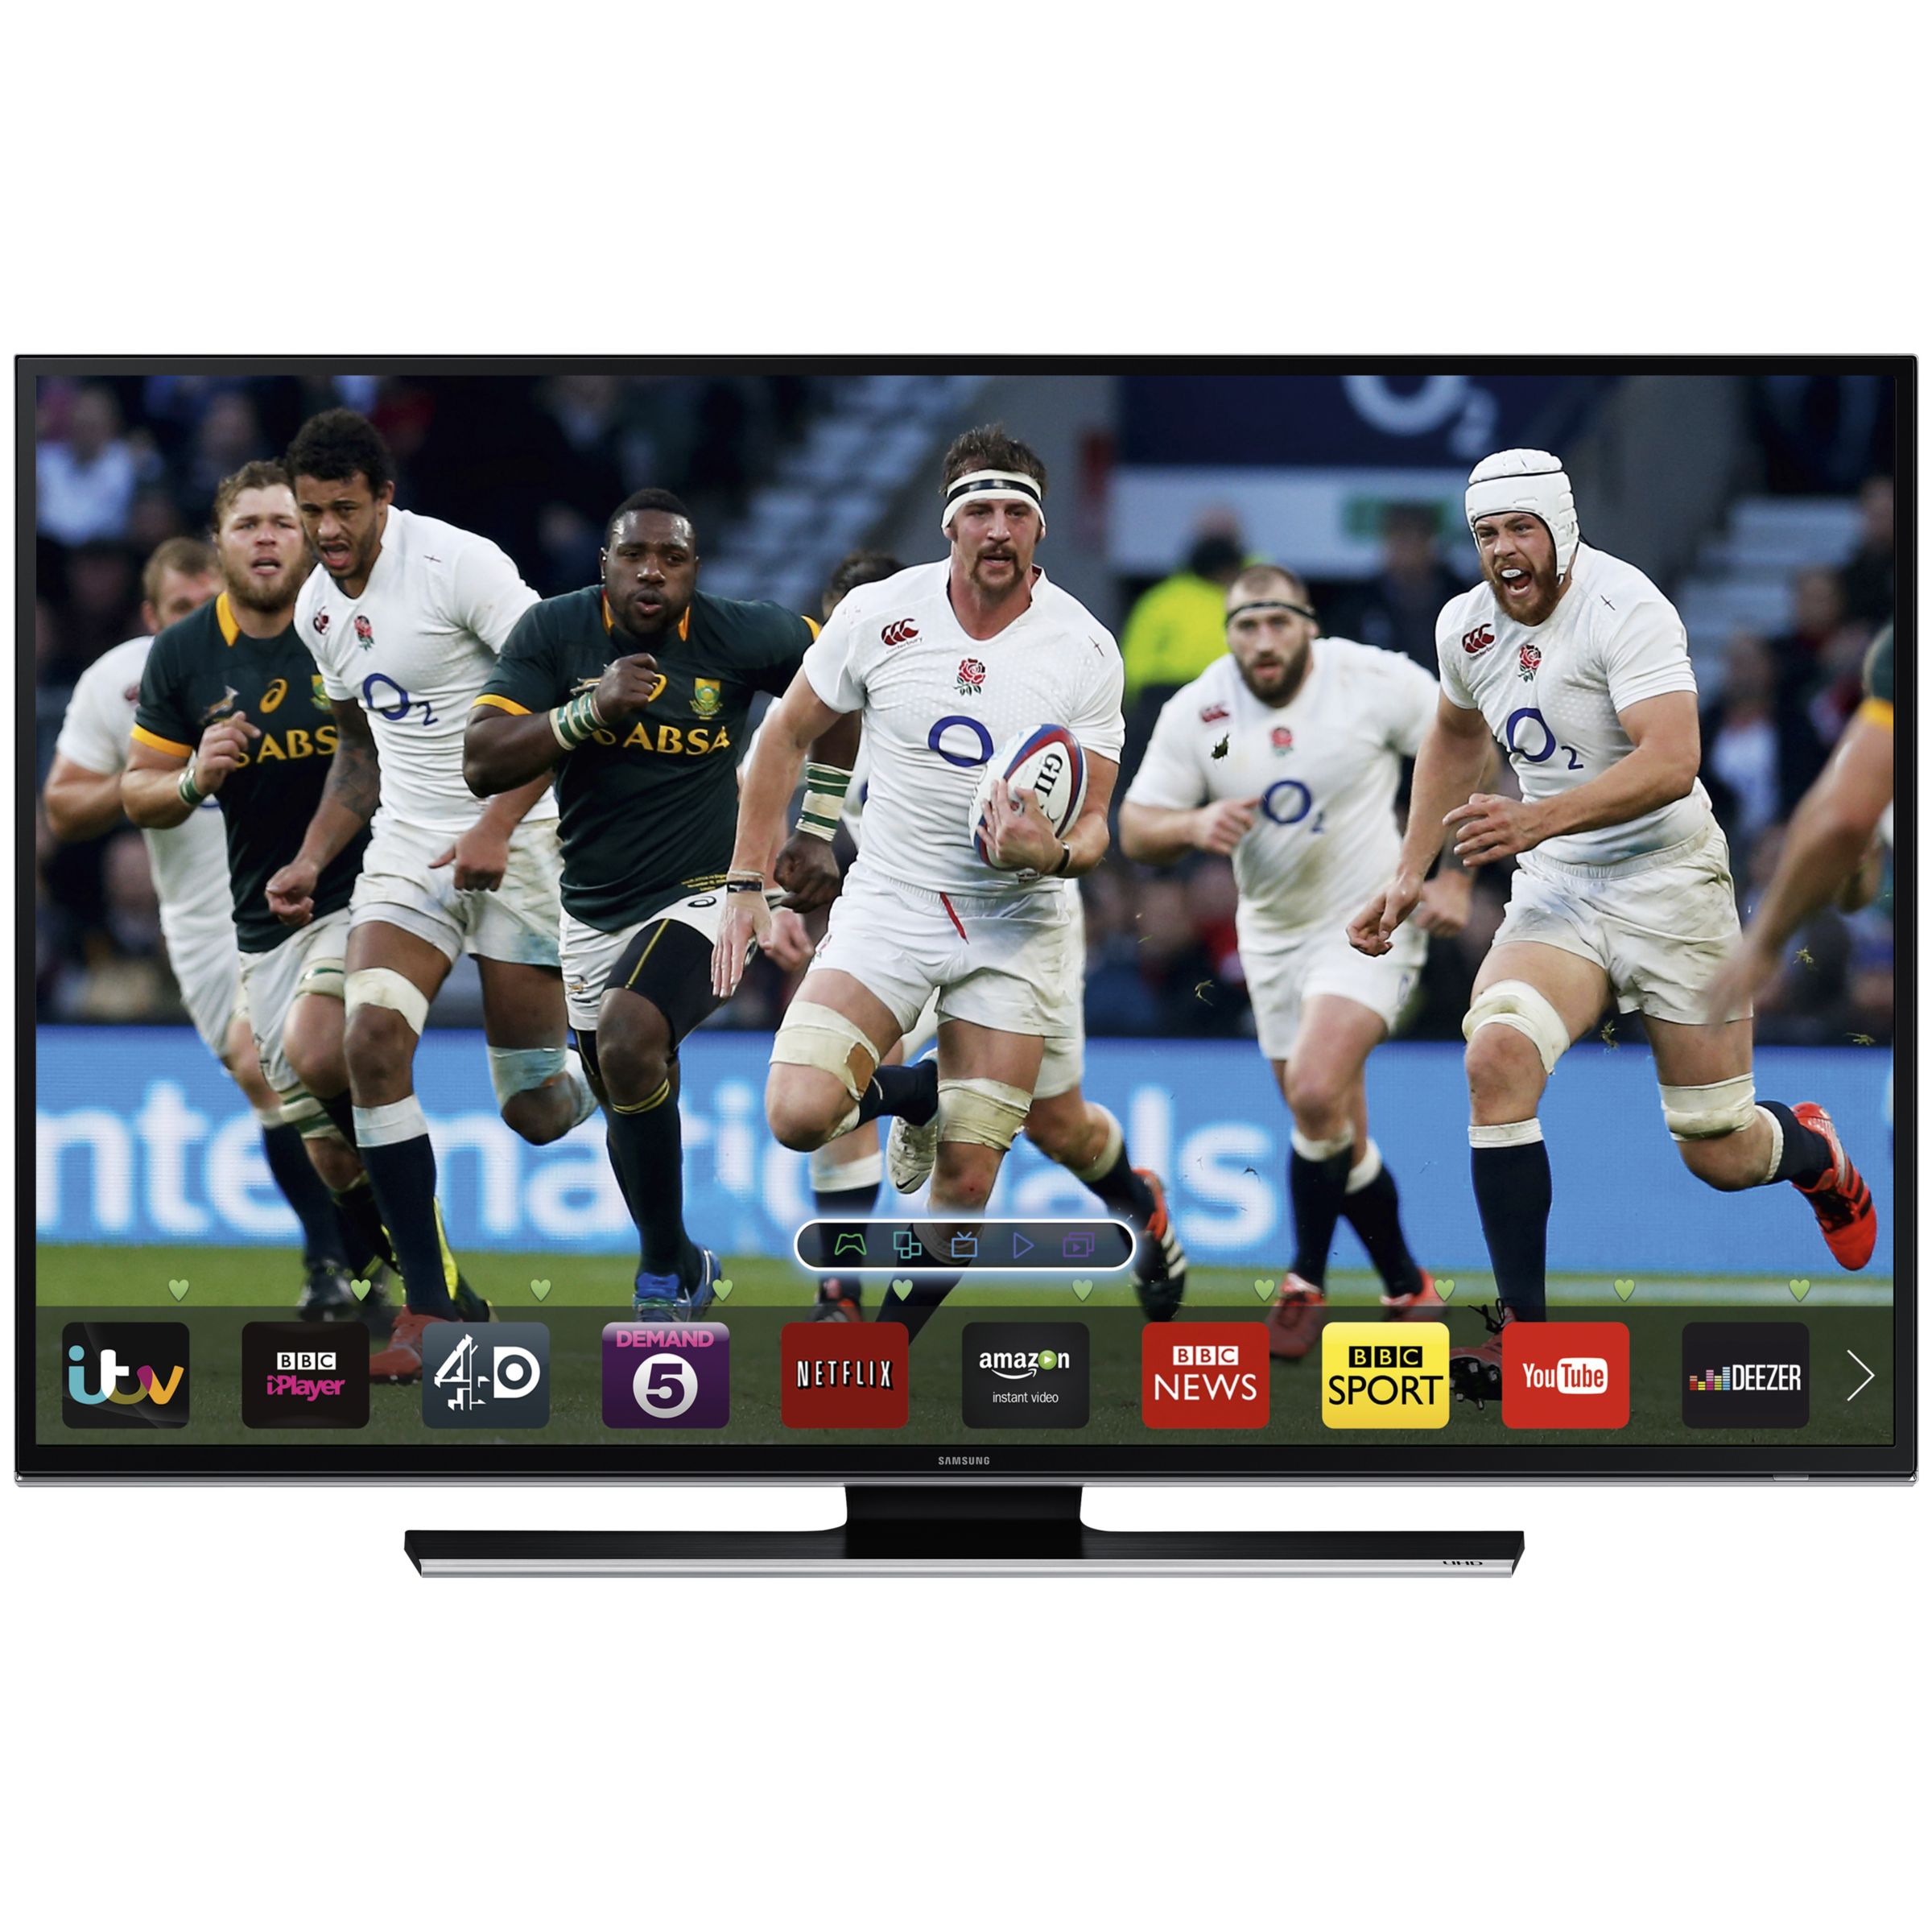 Samsung UE55HU6900 4K Ultra HD Smart TV, 55" with Freeview ...